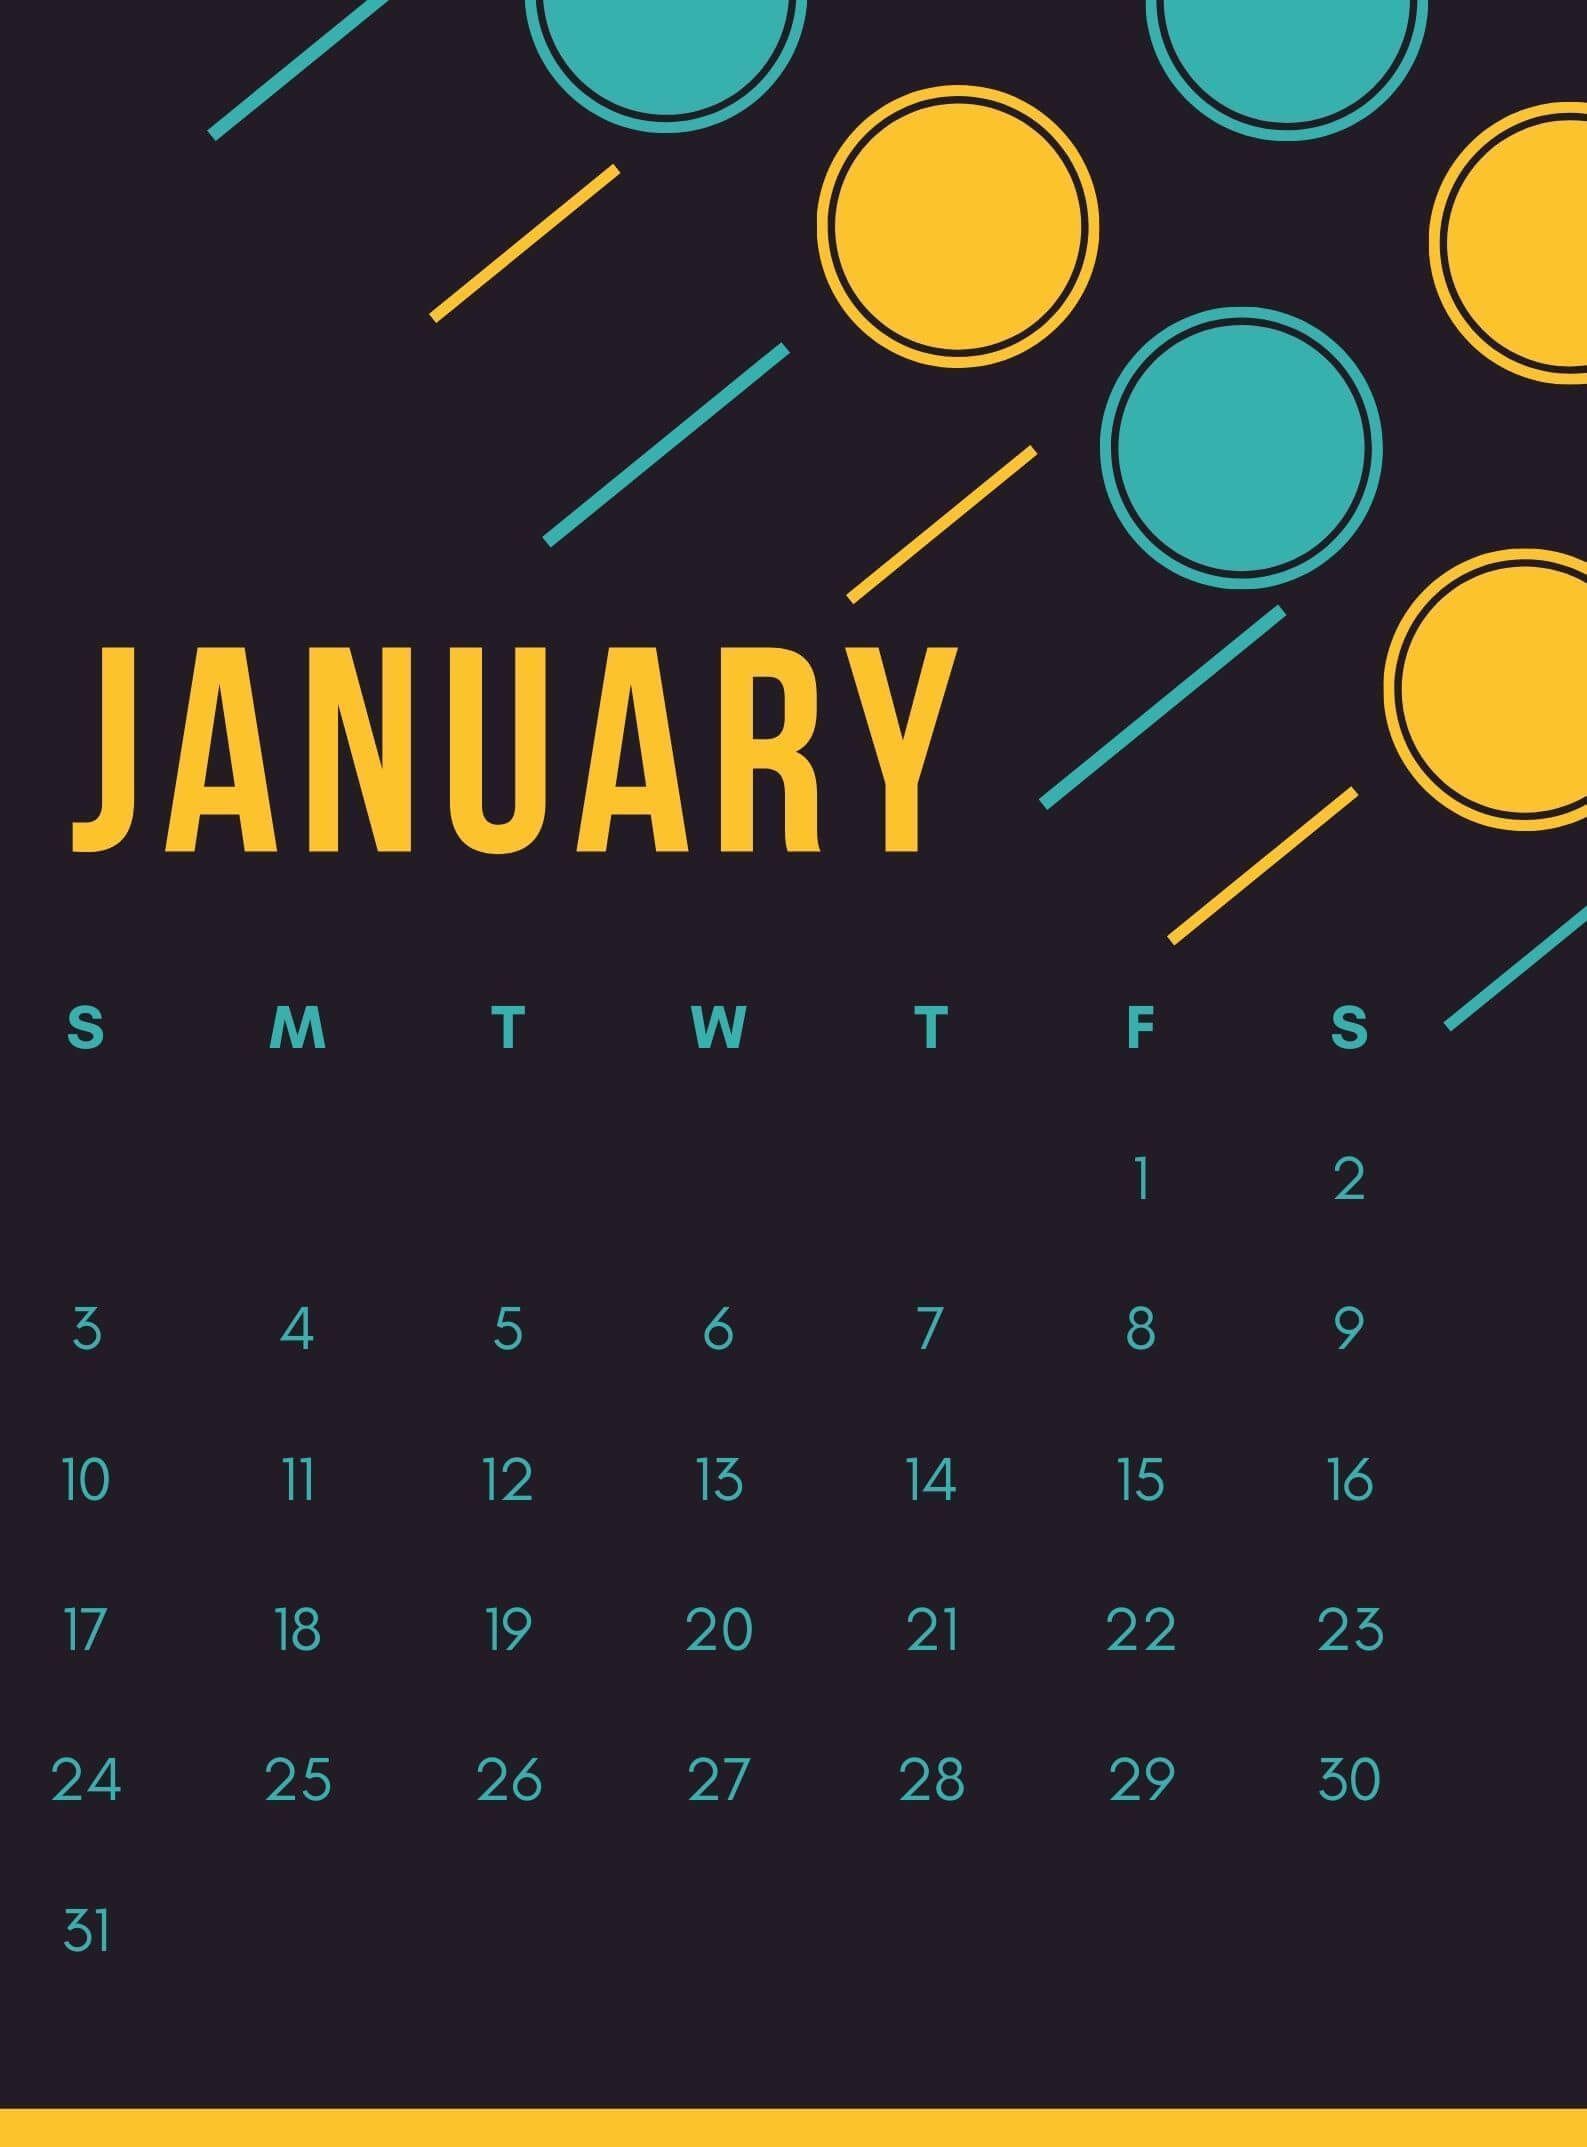 January 2021 Calendar Wallpaper Hd Image ID 14